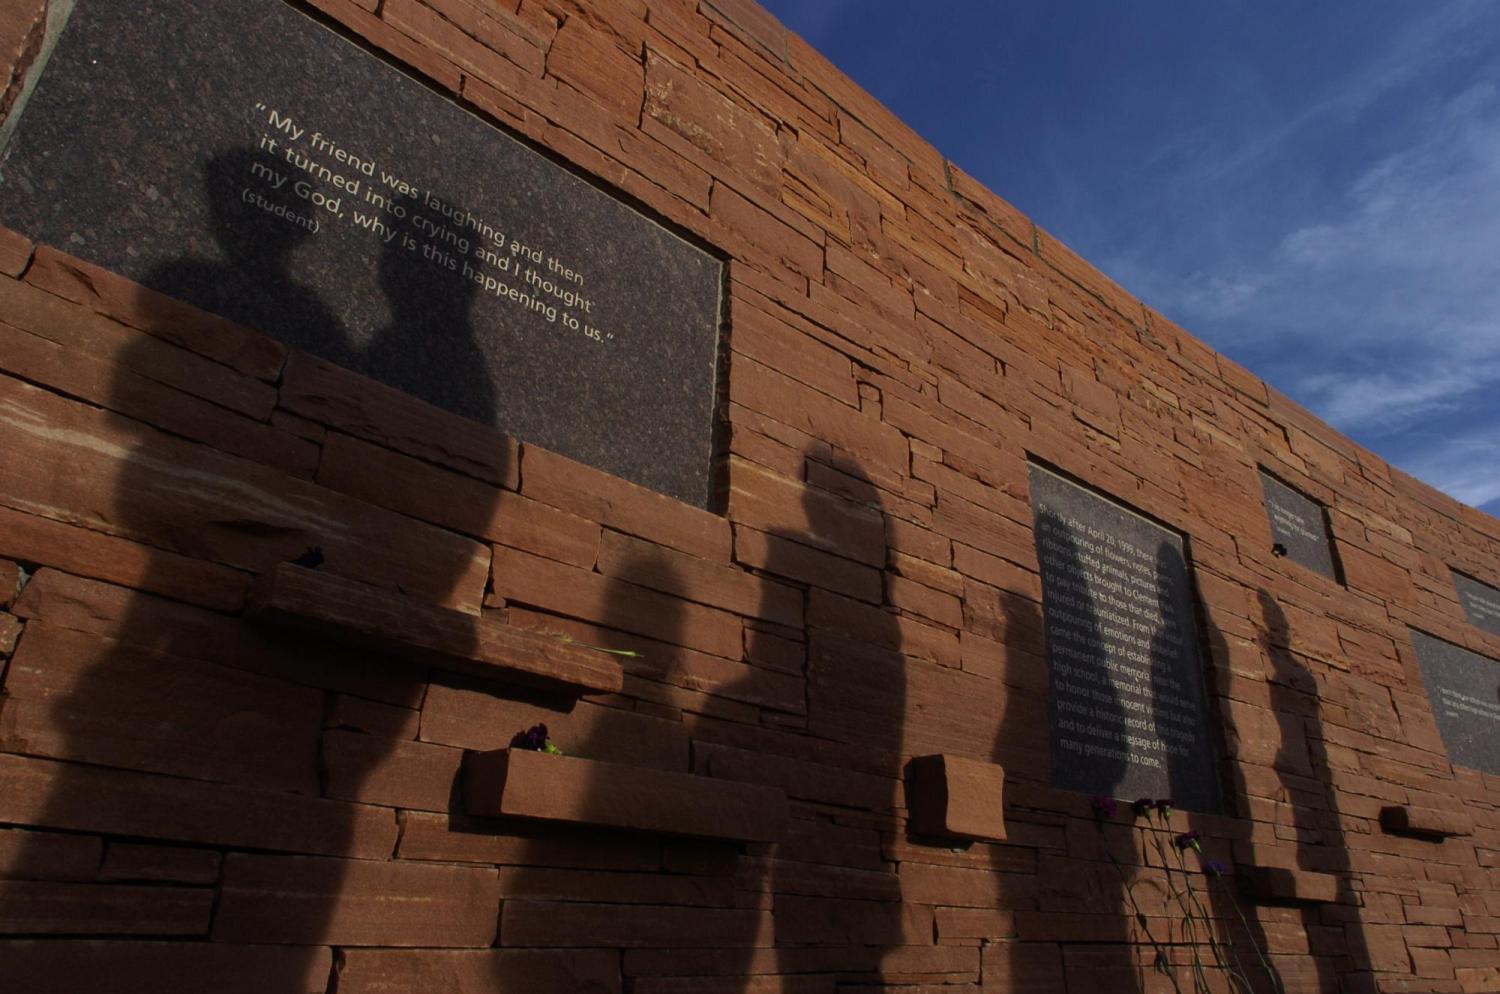 Visitors to the Columbine Memorial